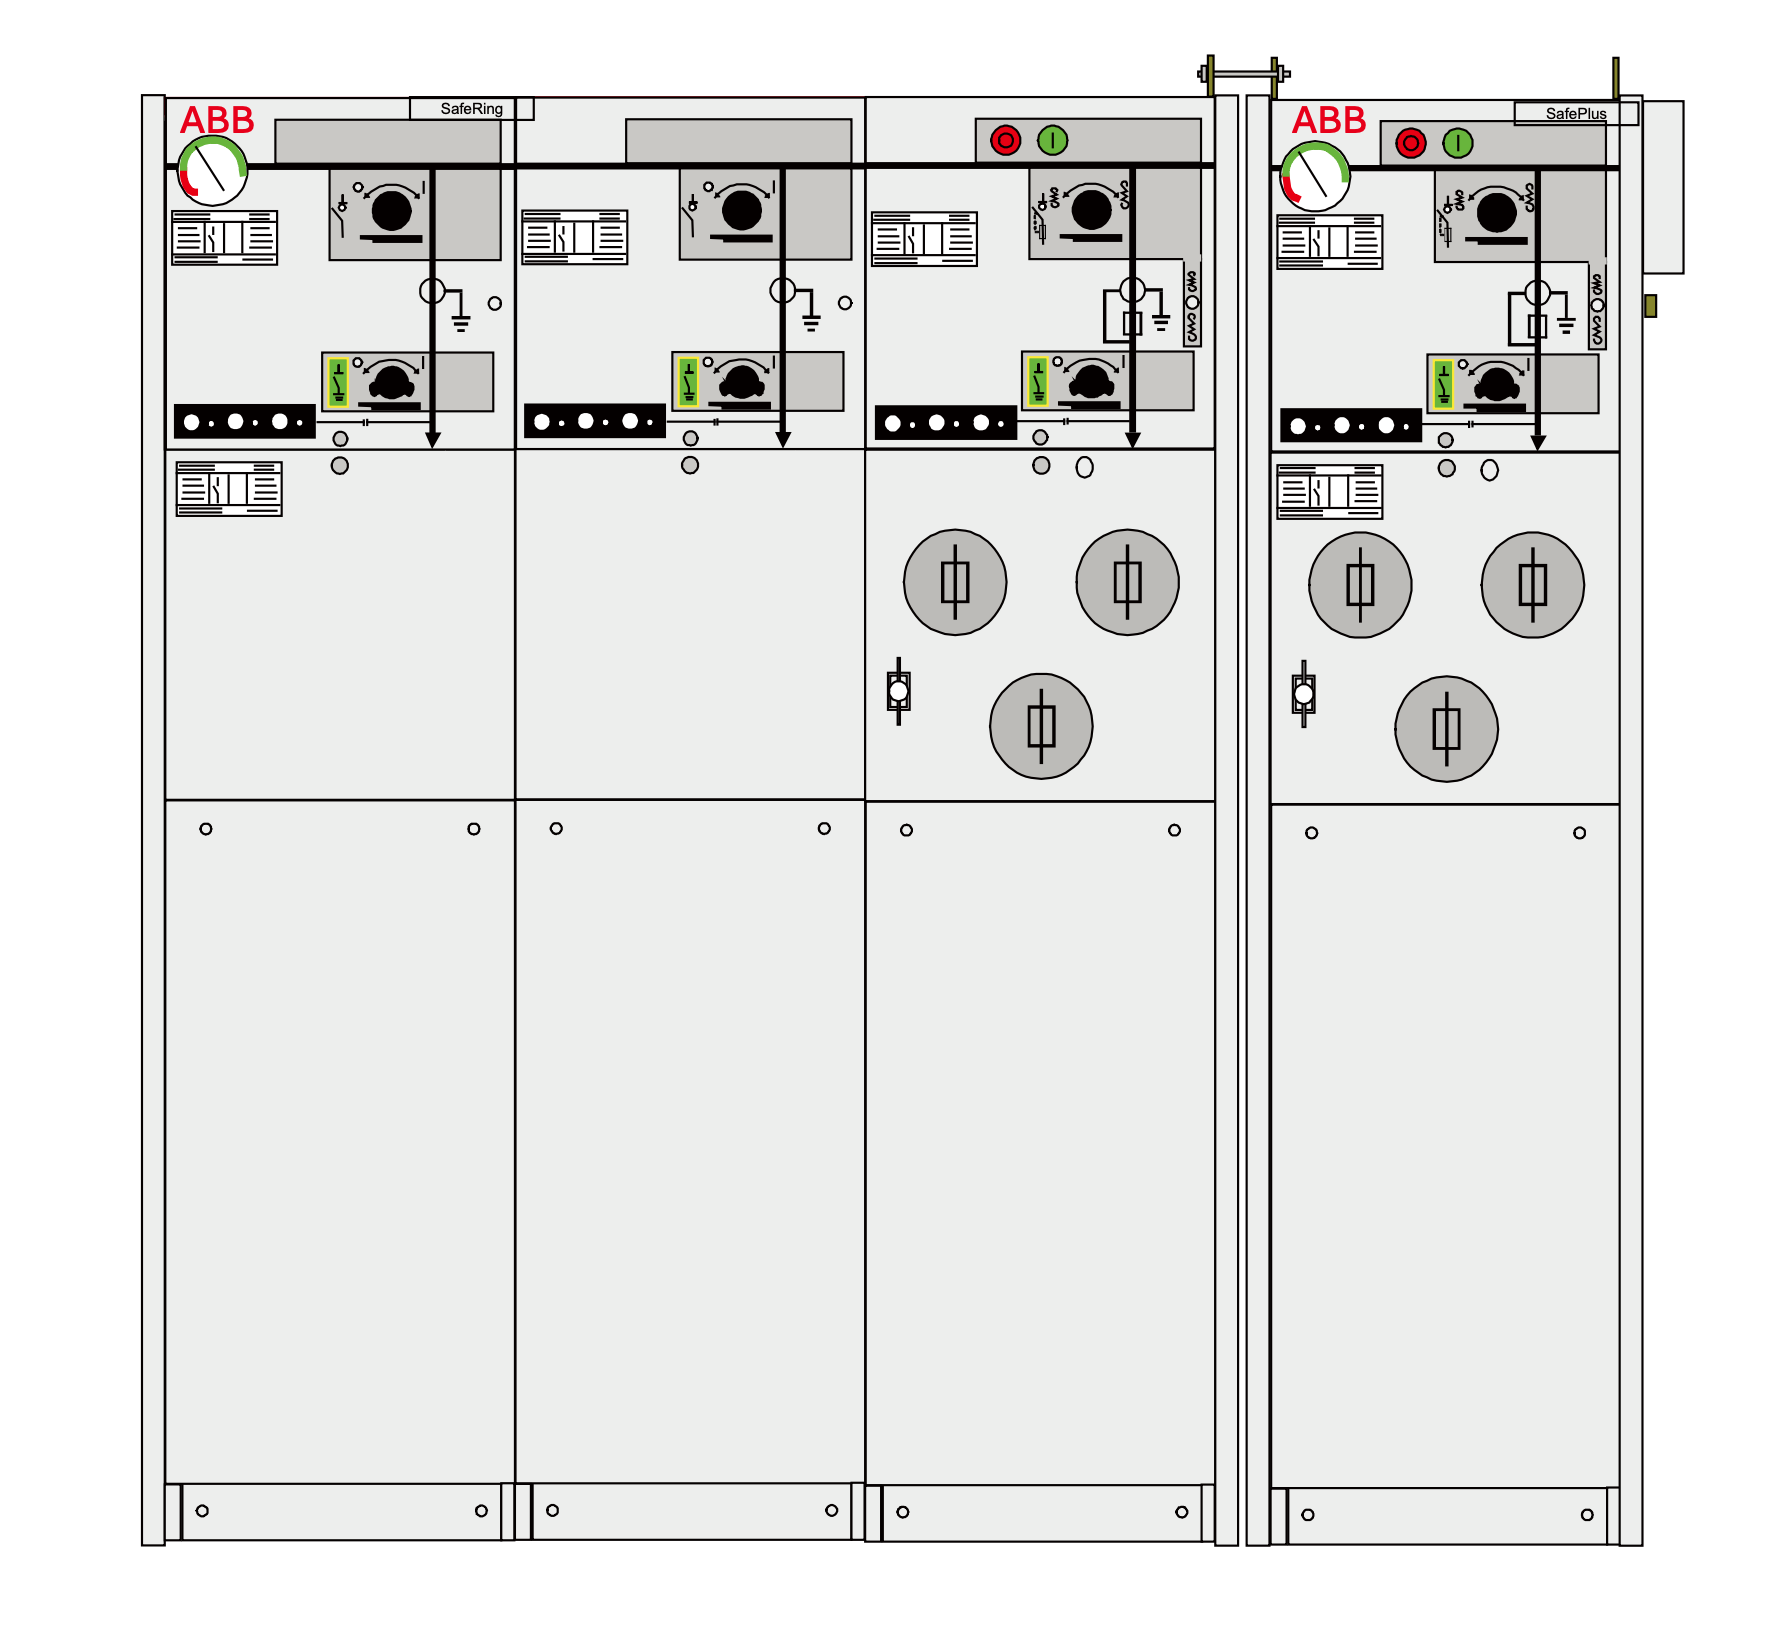 6-40.5kV ABB safeplus switchgear panel